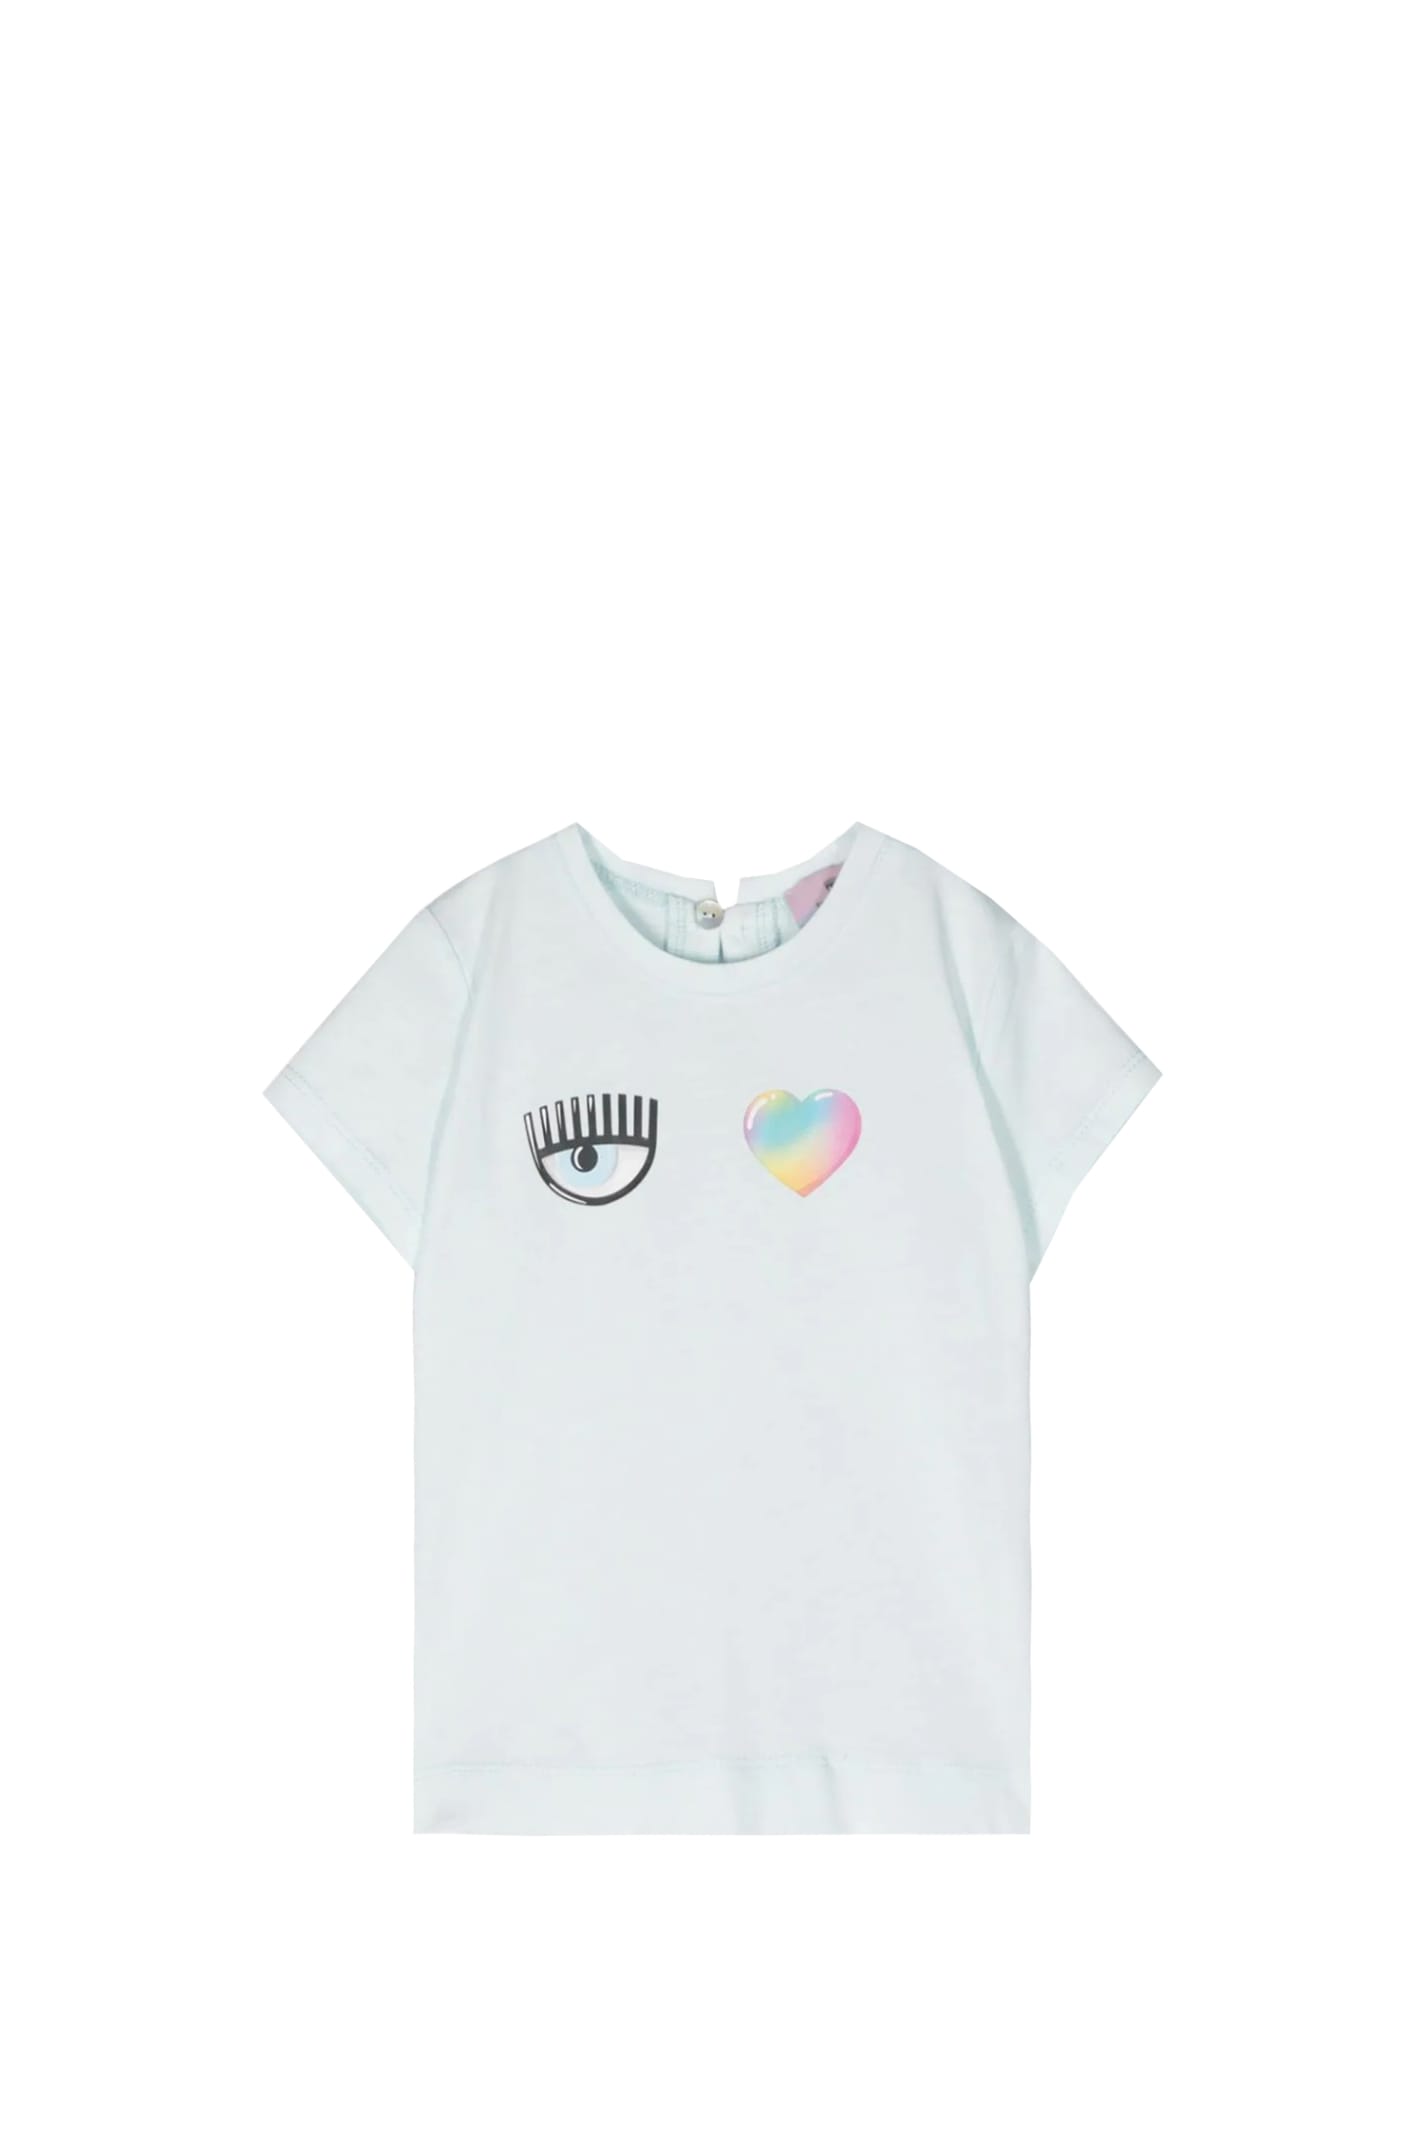 Chiara Ferragni Babies' Cotton T-shirt In White